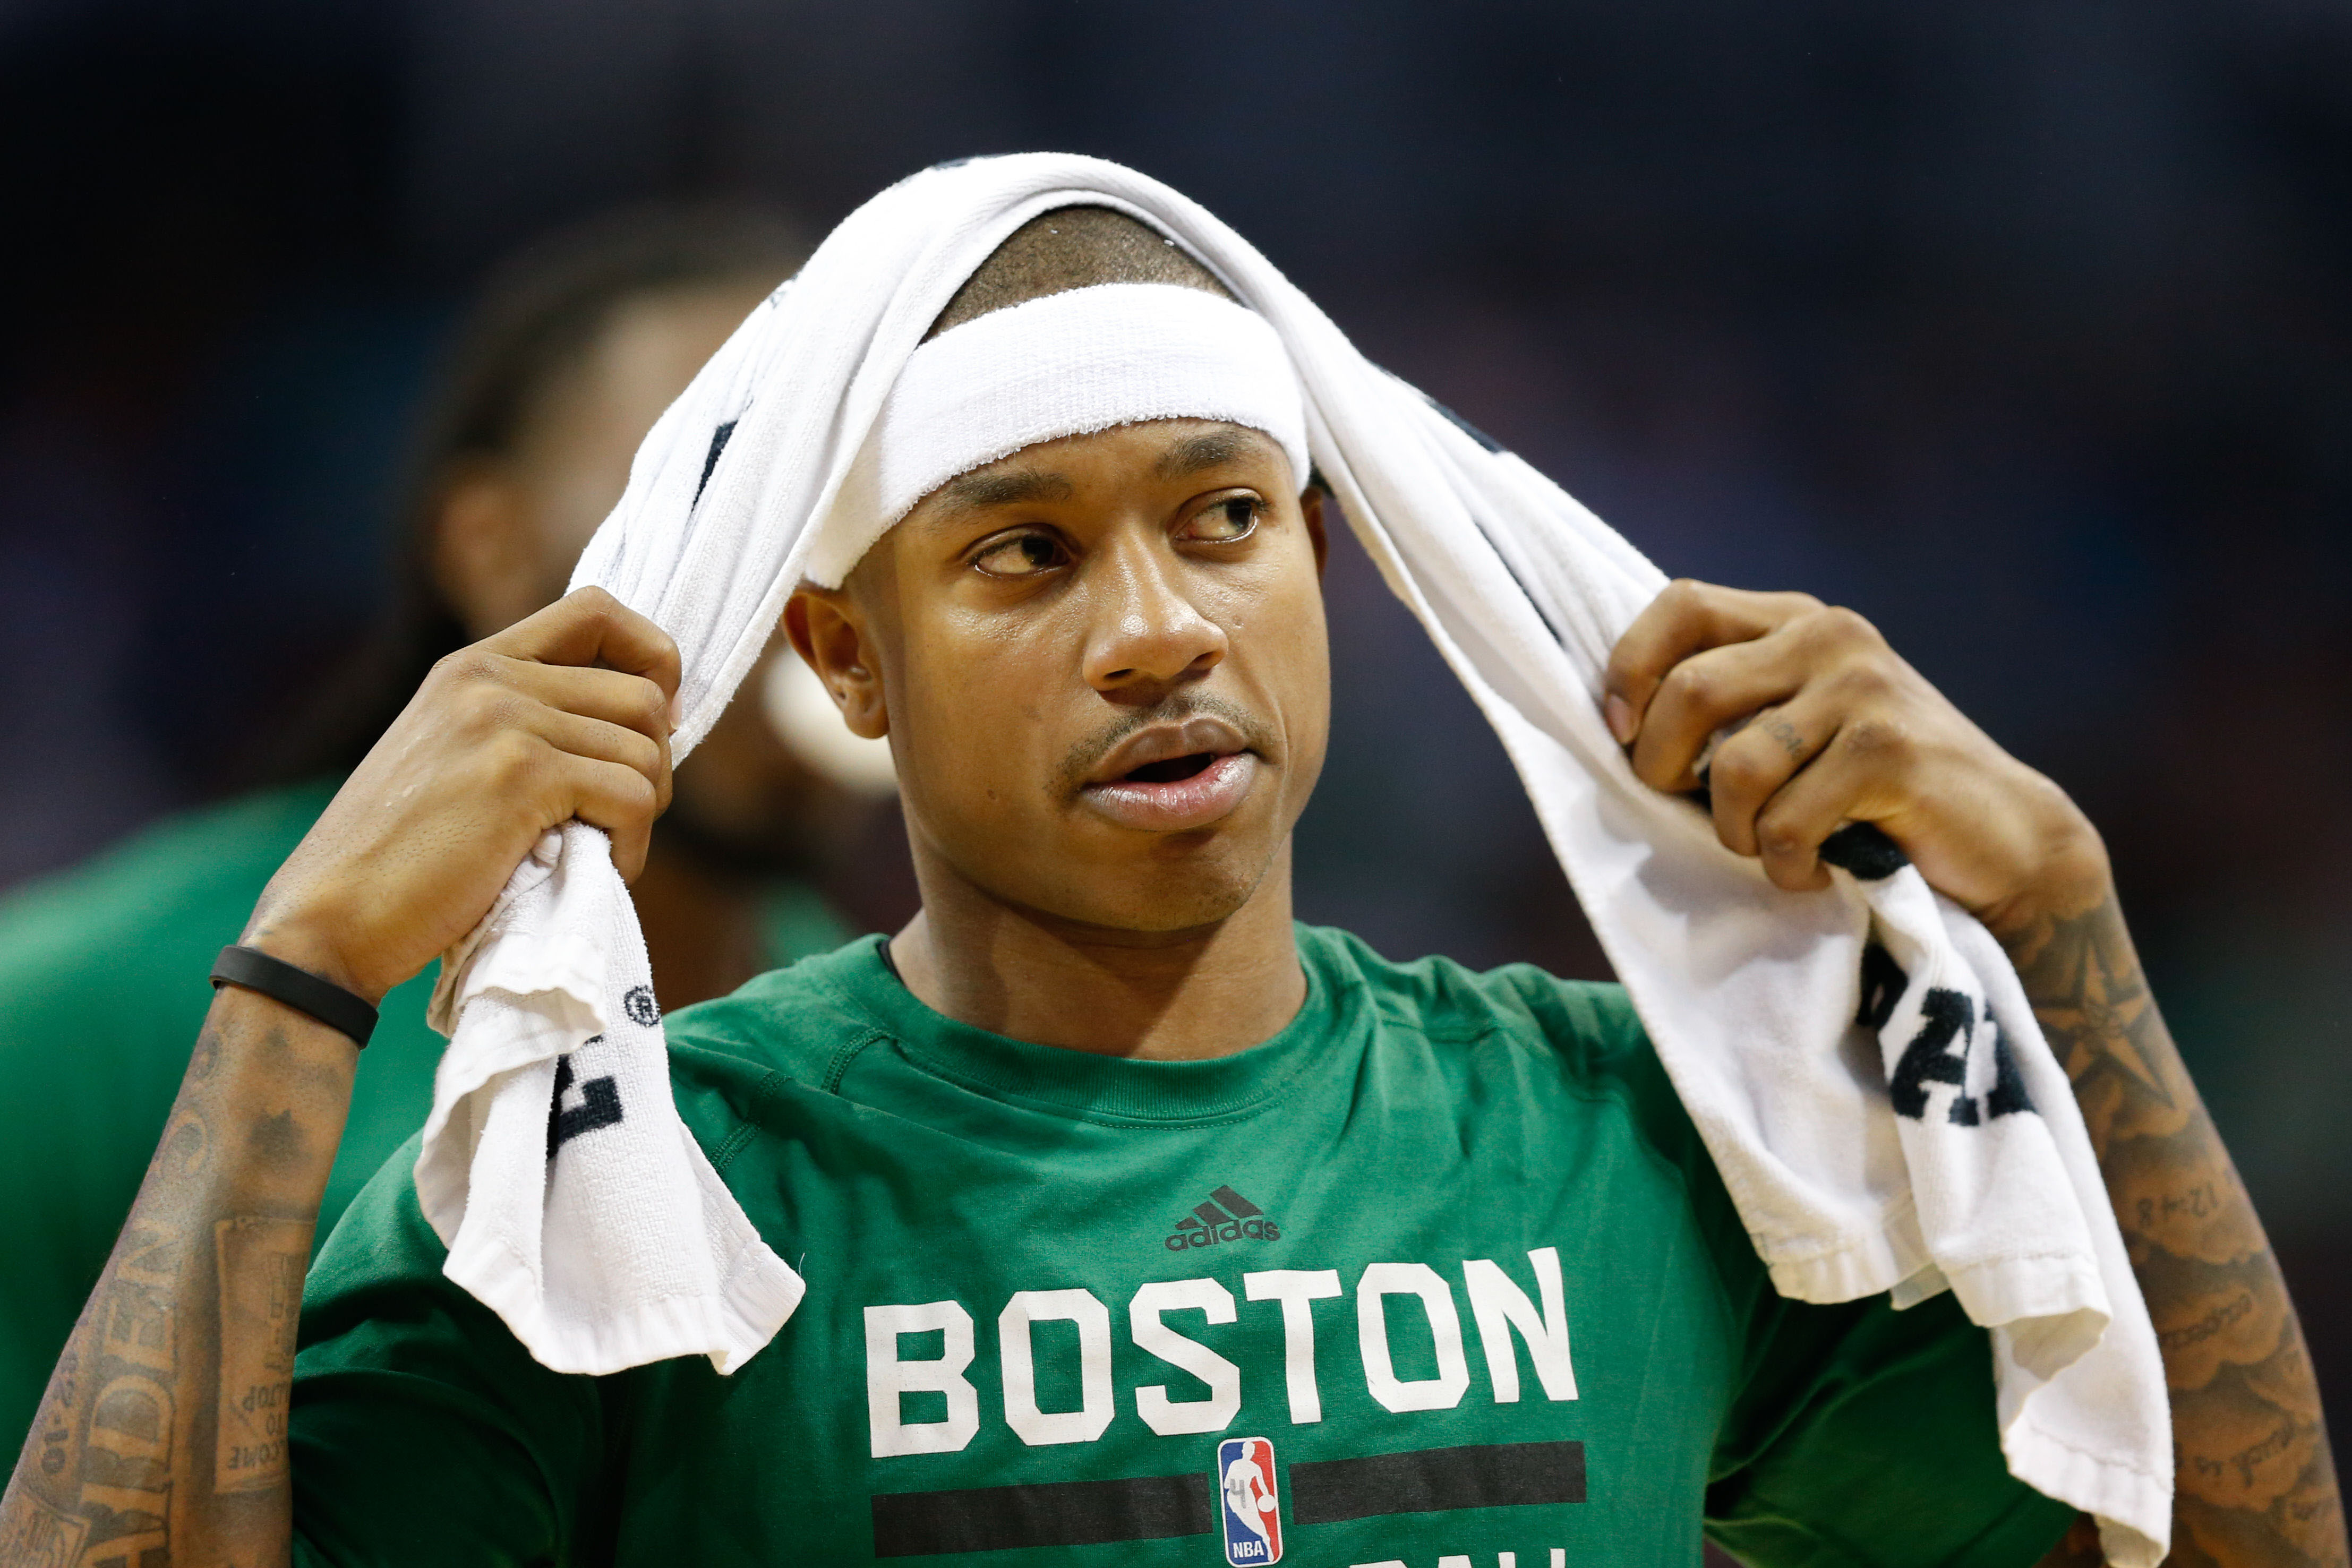 Adidas NBA Boston Celtics Isaiah Thomas